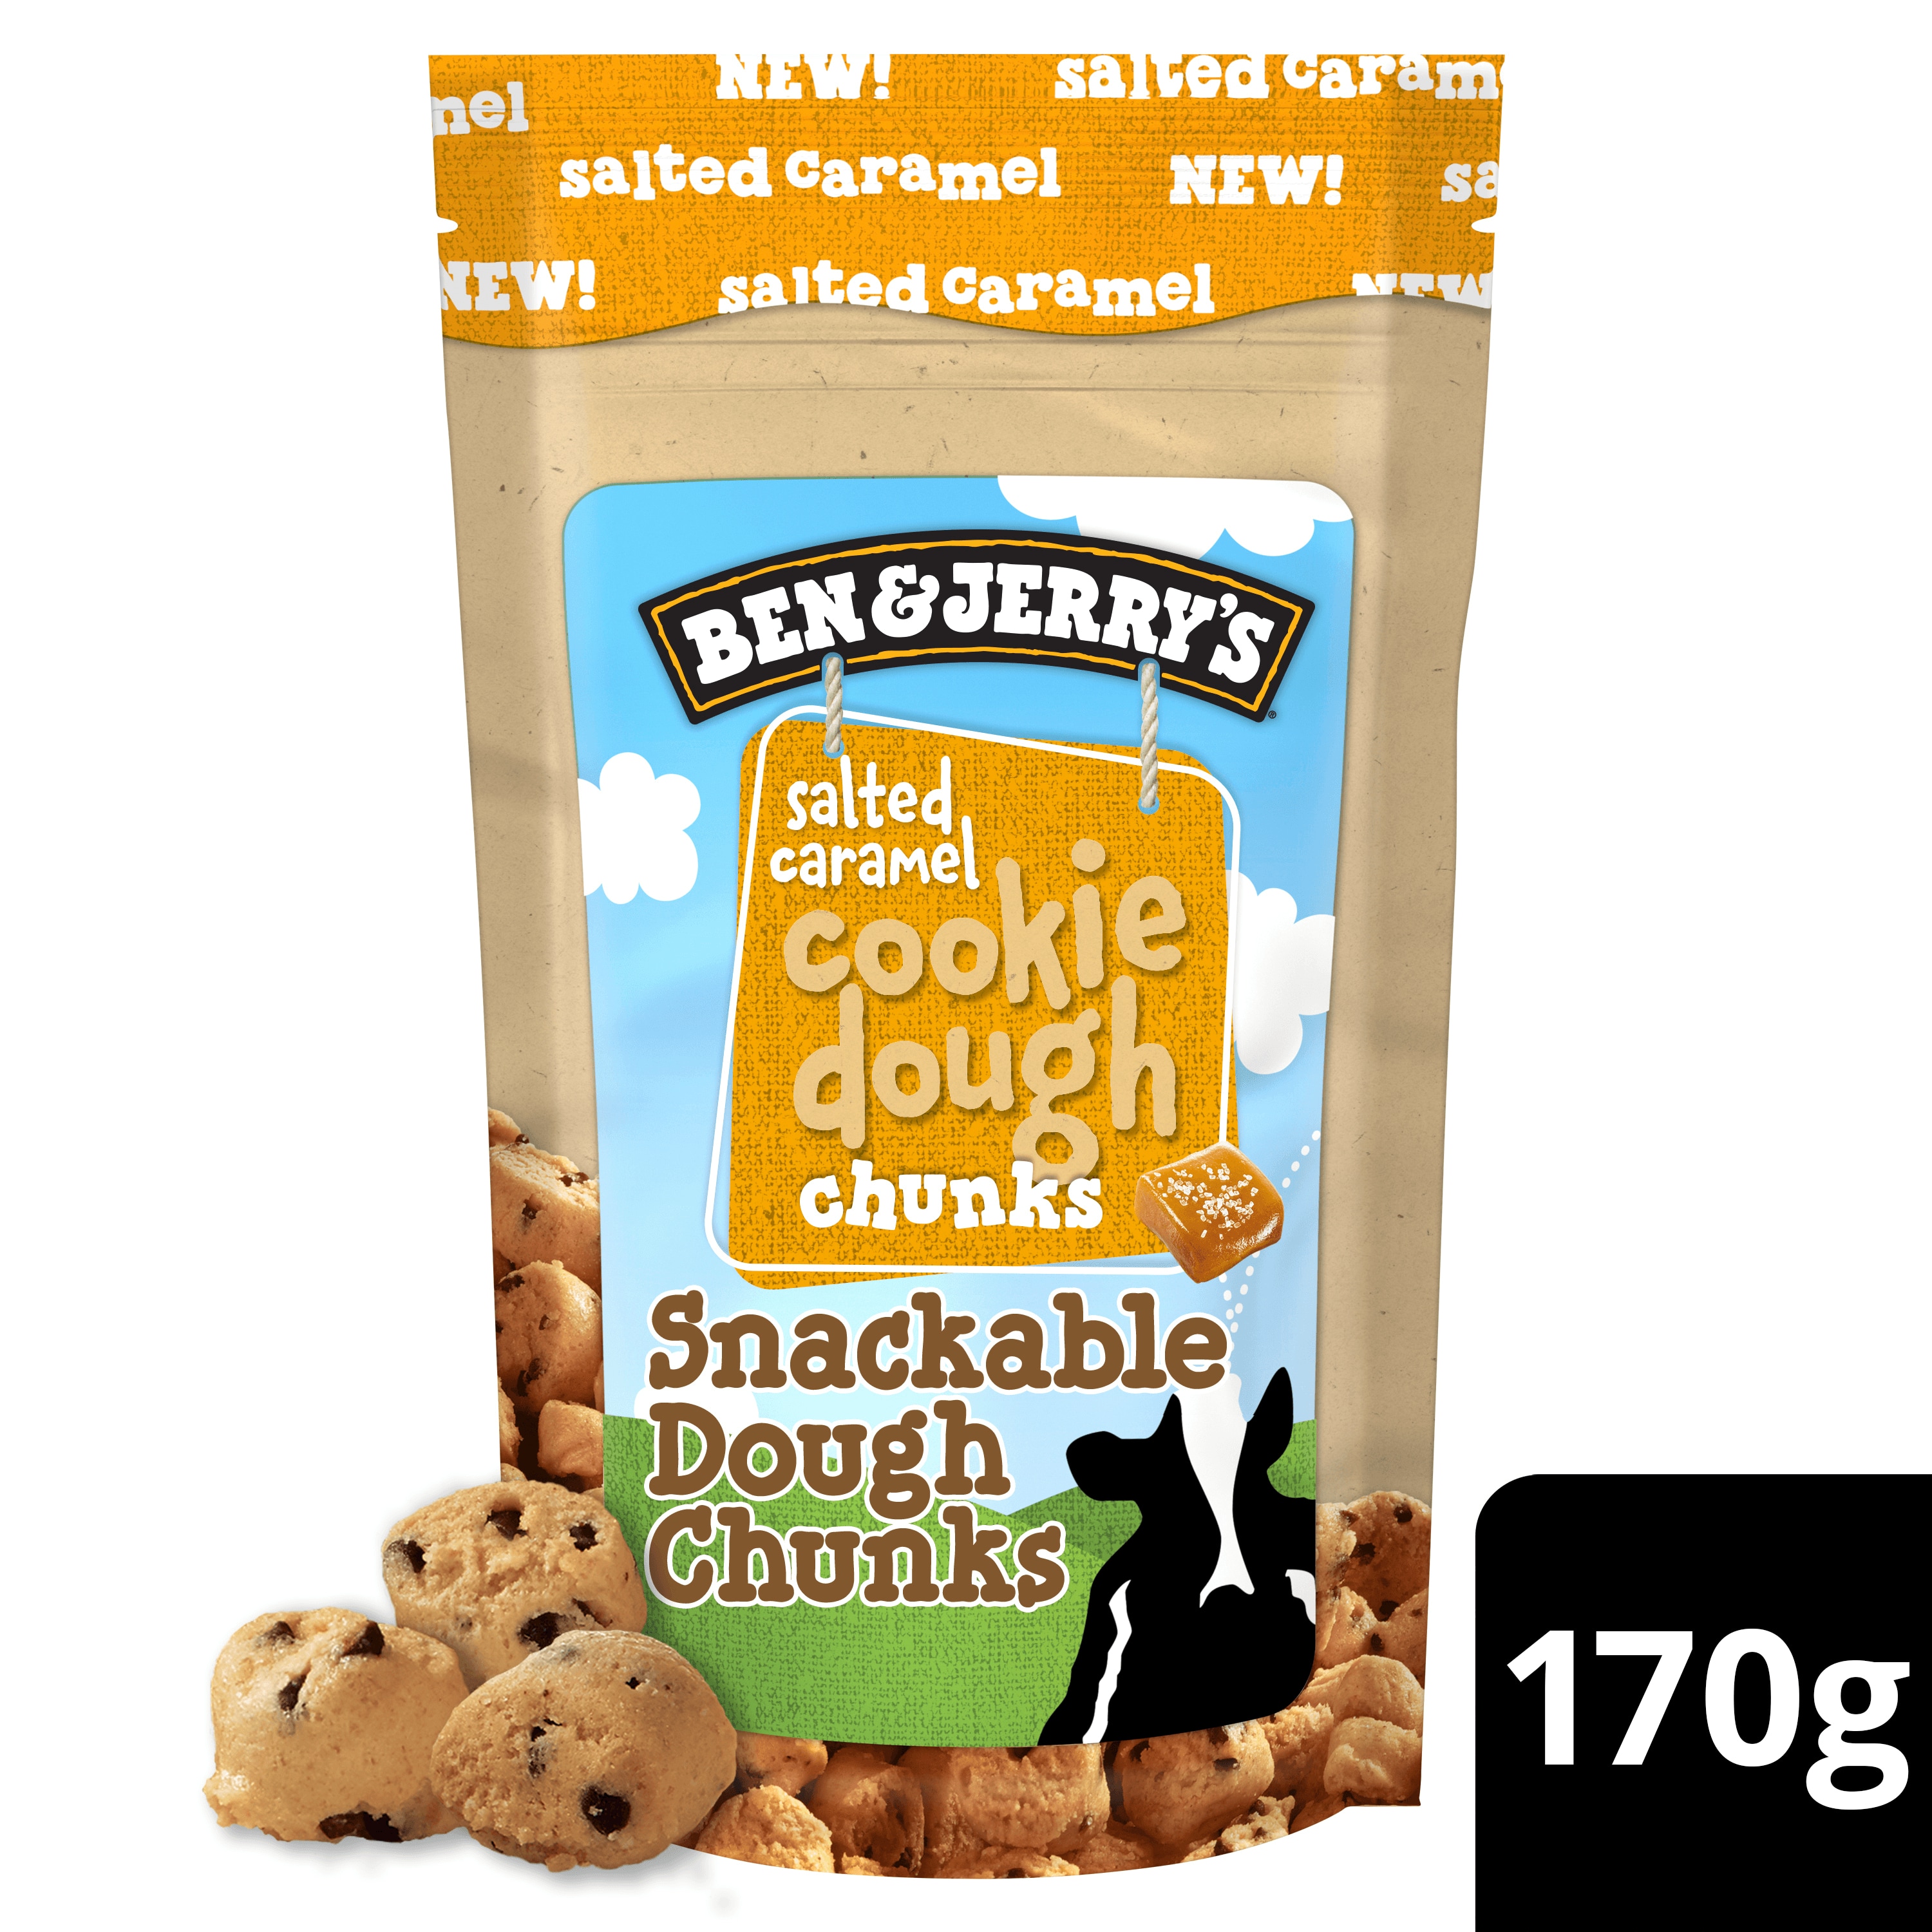 Ben & Jerry's Salted Caramel Cookie Dough Chunks 20g bei REWE ...